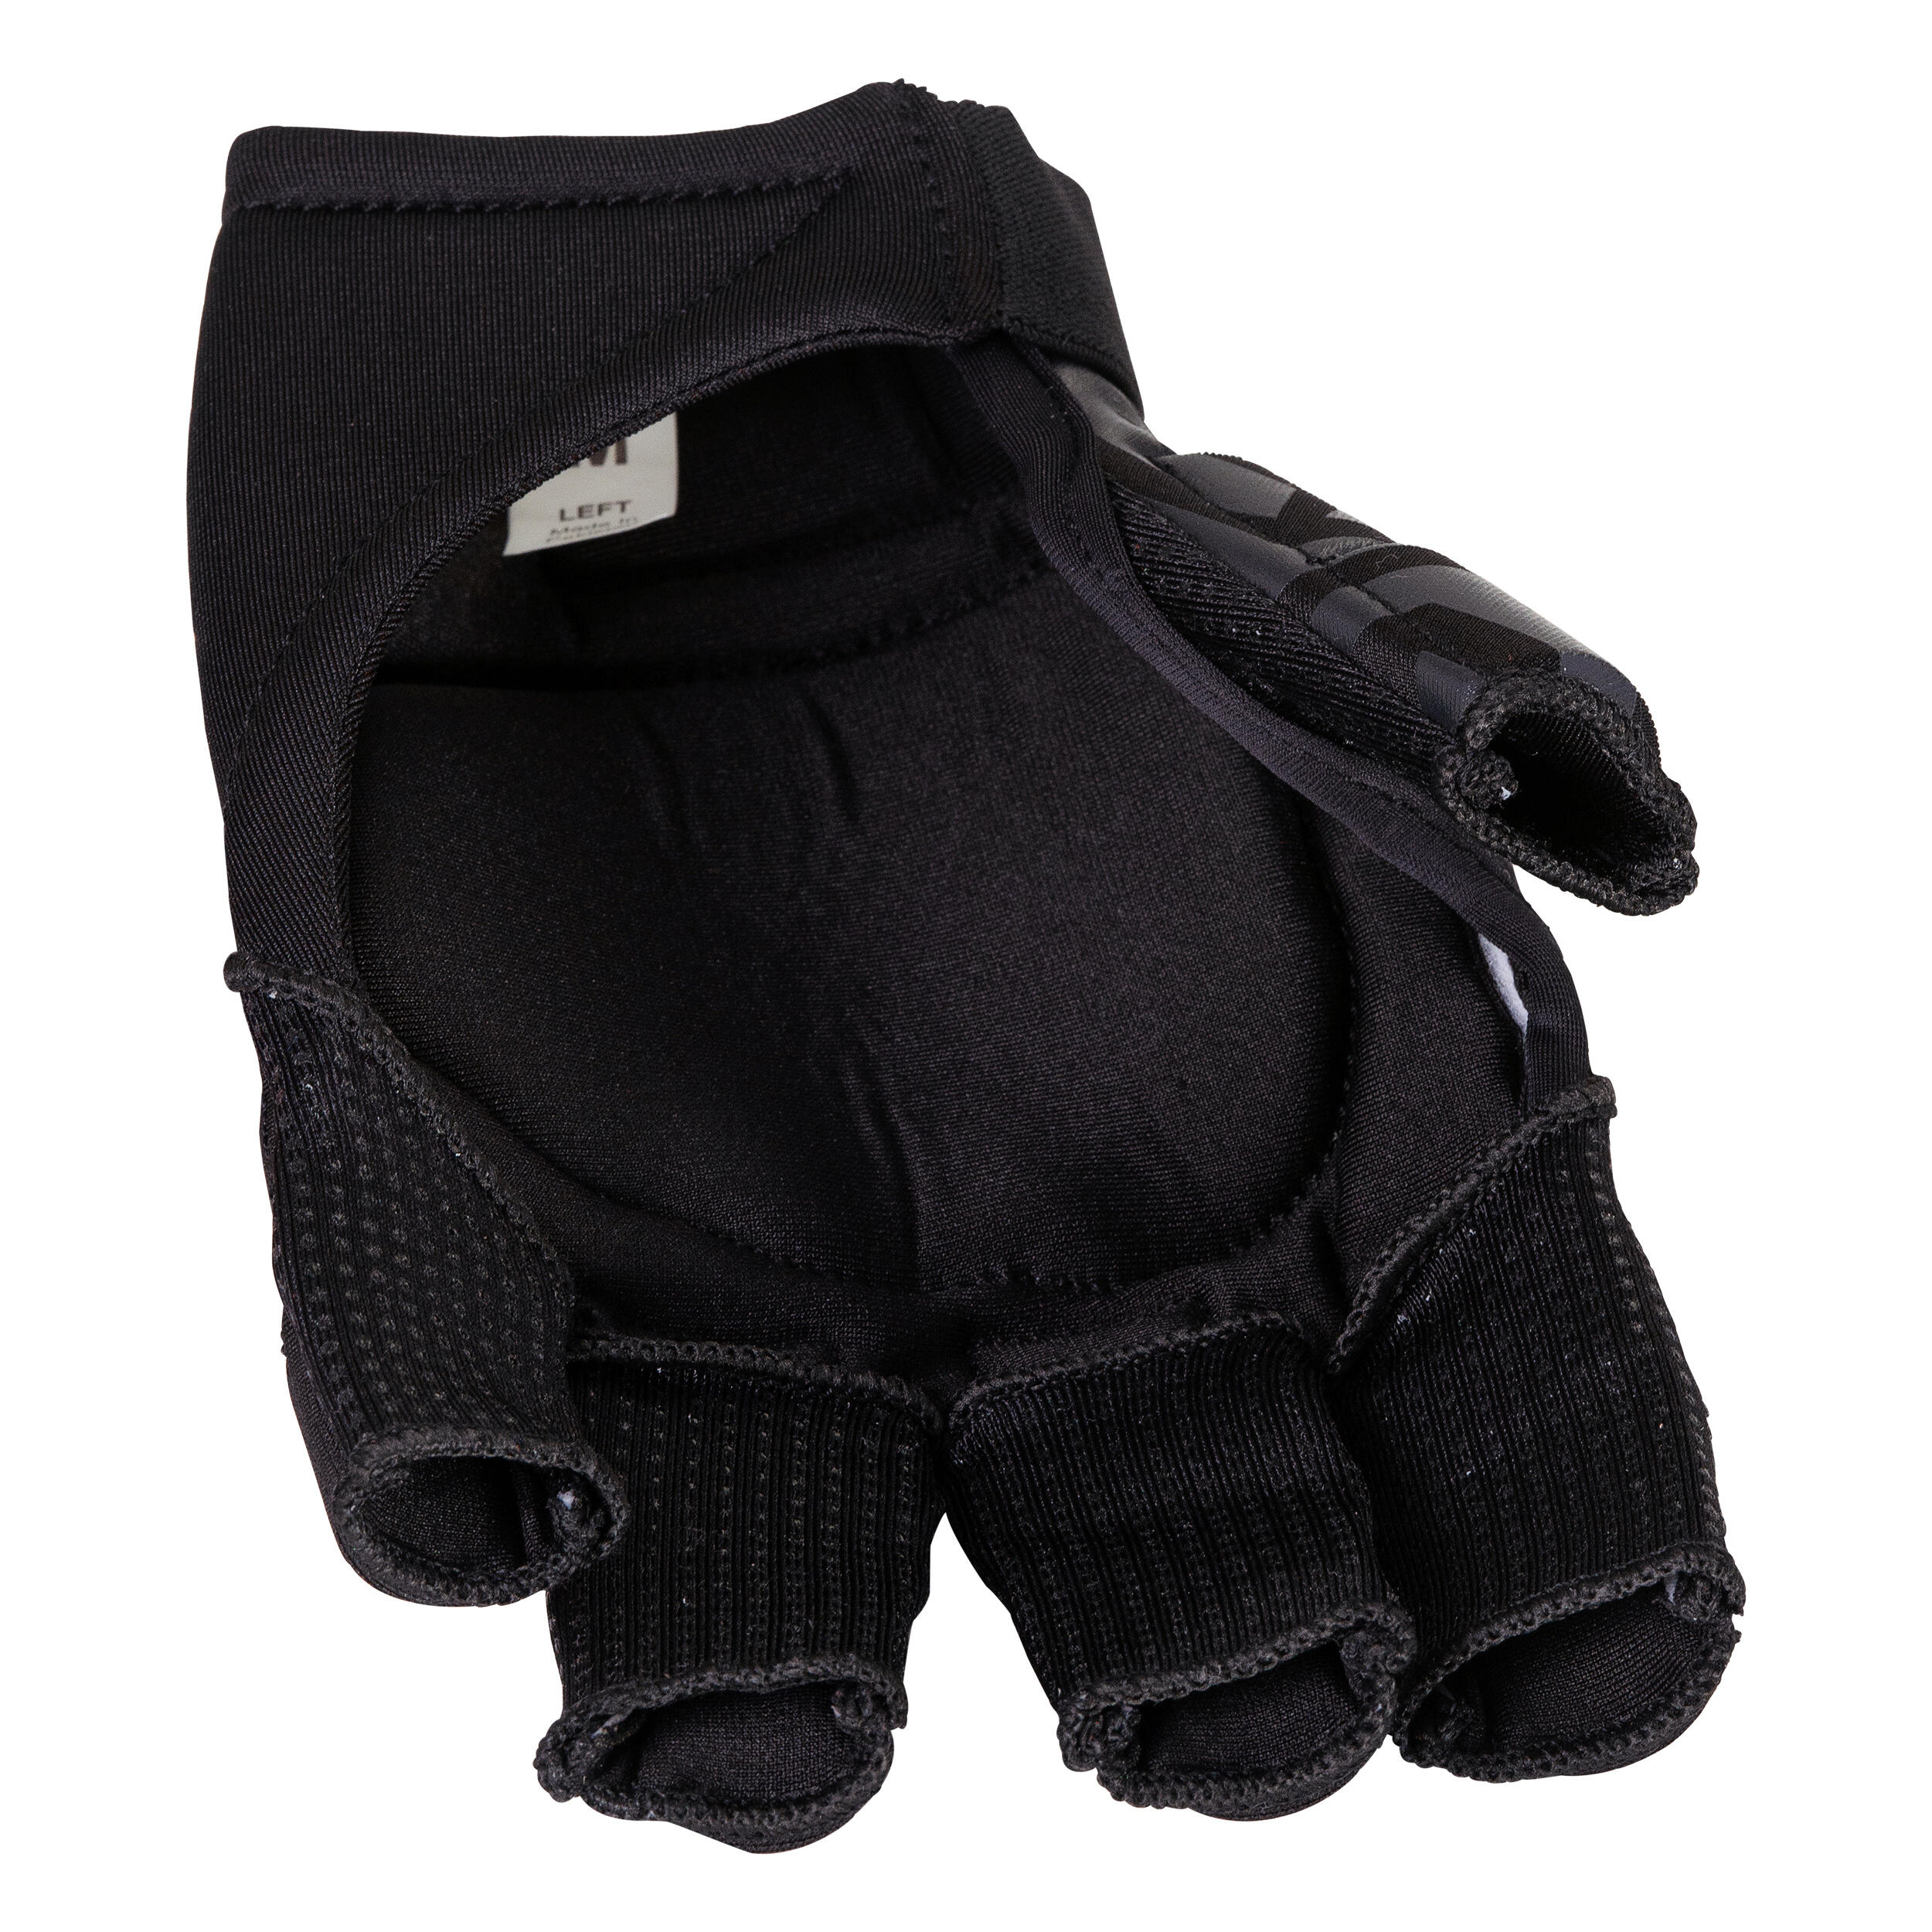 Kids'/Adult Mid/High Intensity 2 Knuckle Field Hockey Glove FH520 - Black/Grey 3/6